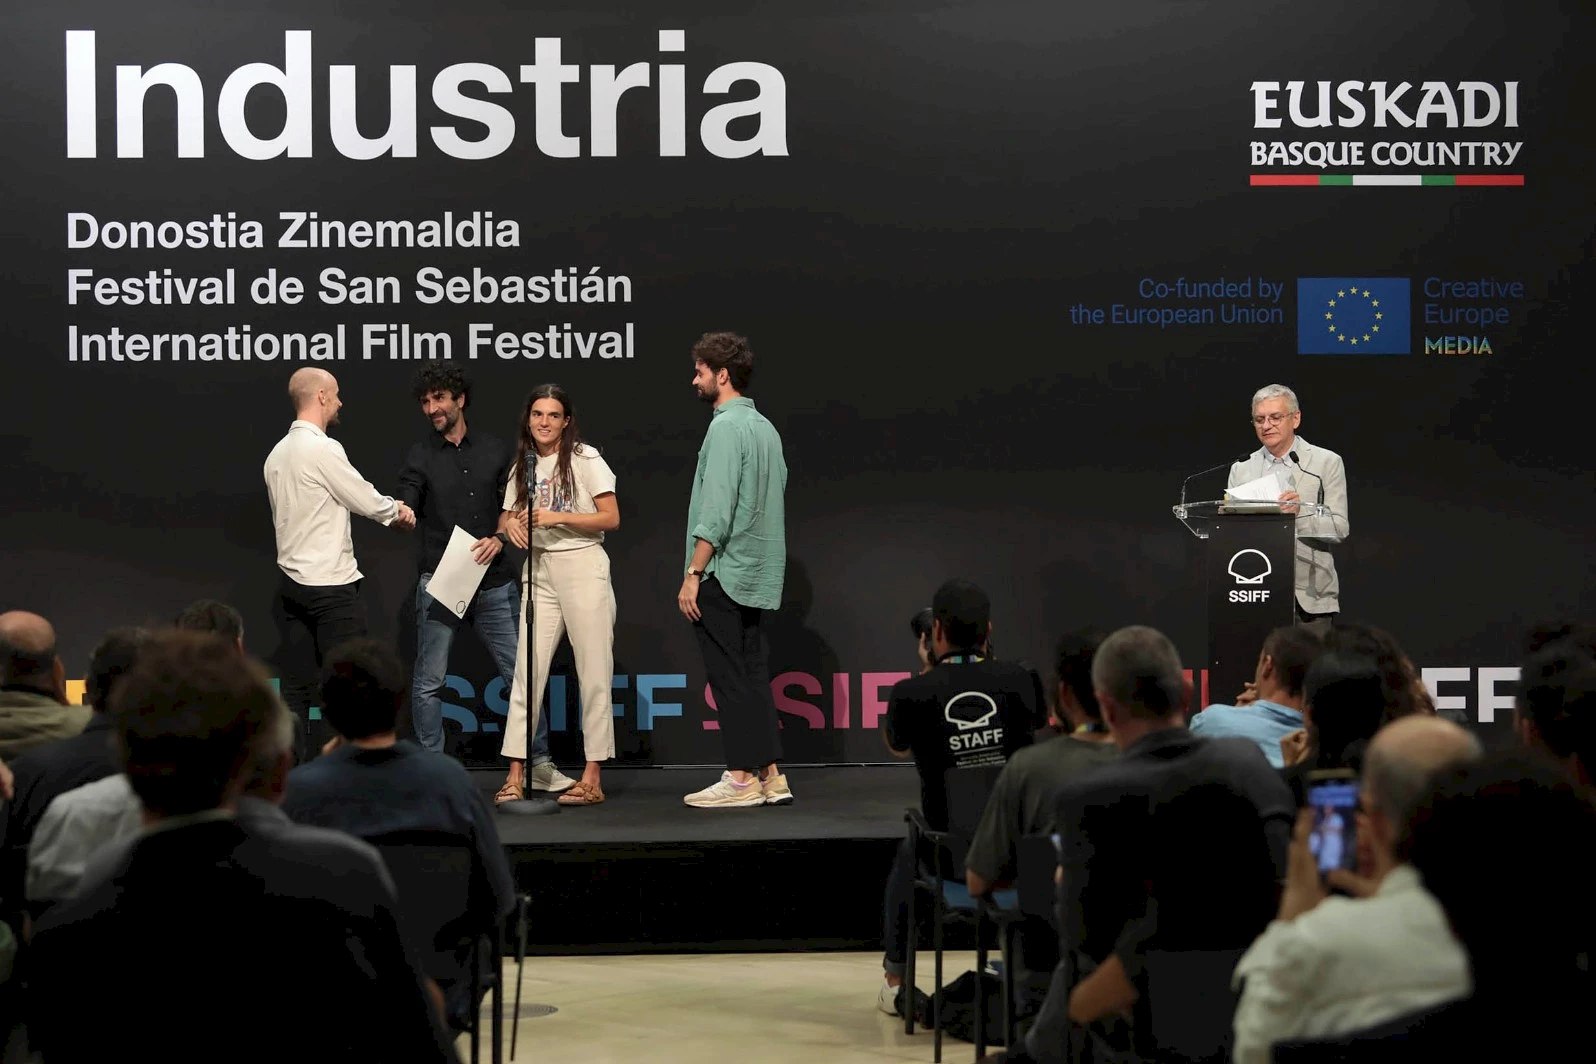 Presentation of the Elamedia Euskadi Post-Production Award. Albert Kuhn and Naomi Pacifique.